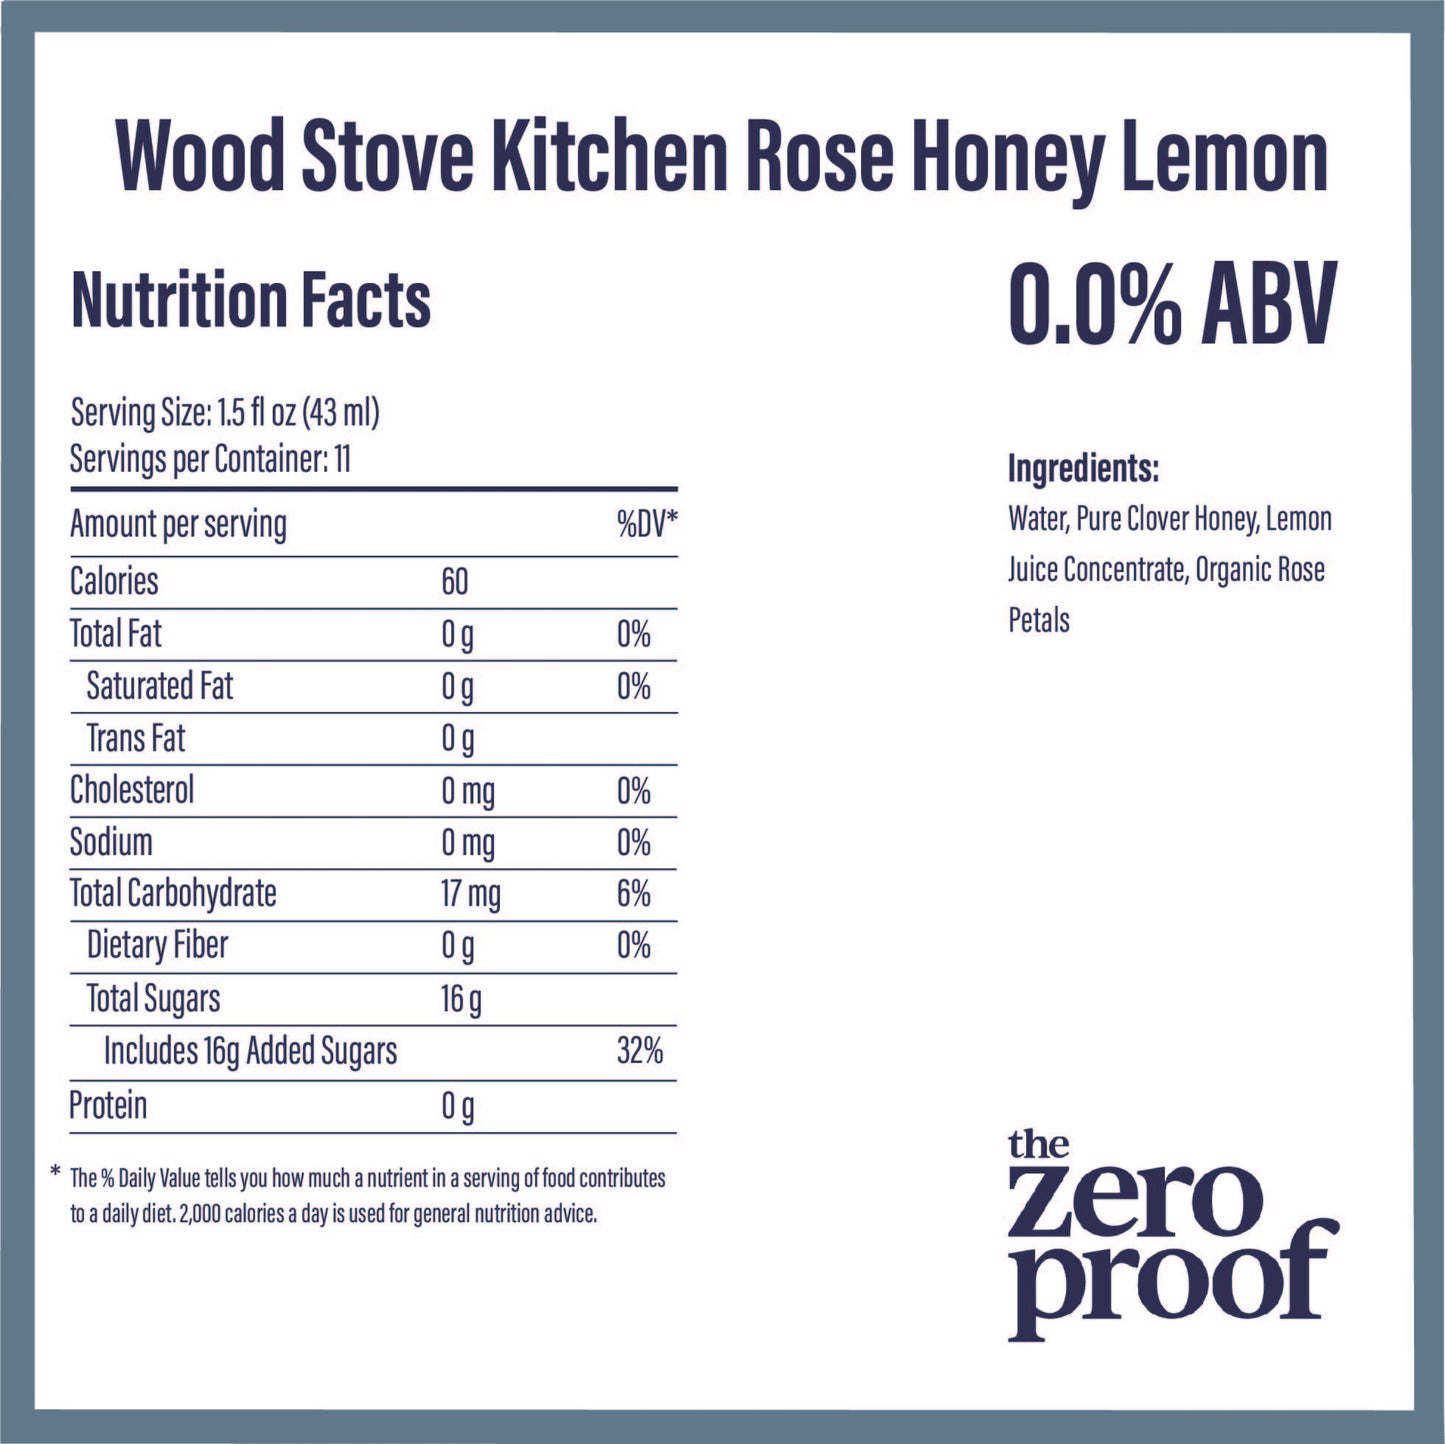 Wood Stove Kitchen Rose Honey Lemon Mixer (16 oz)